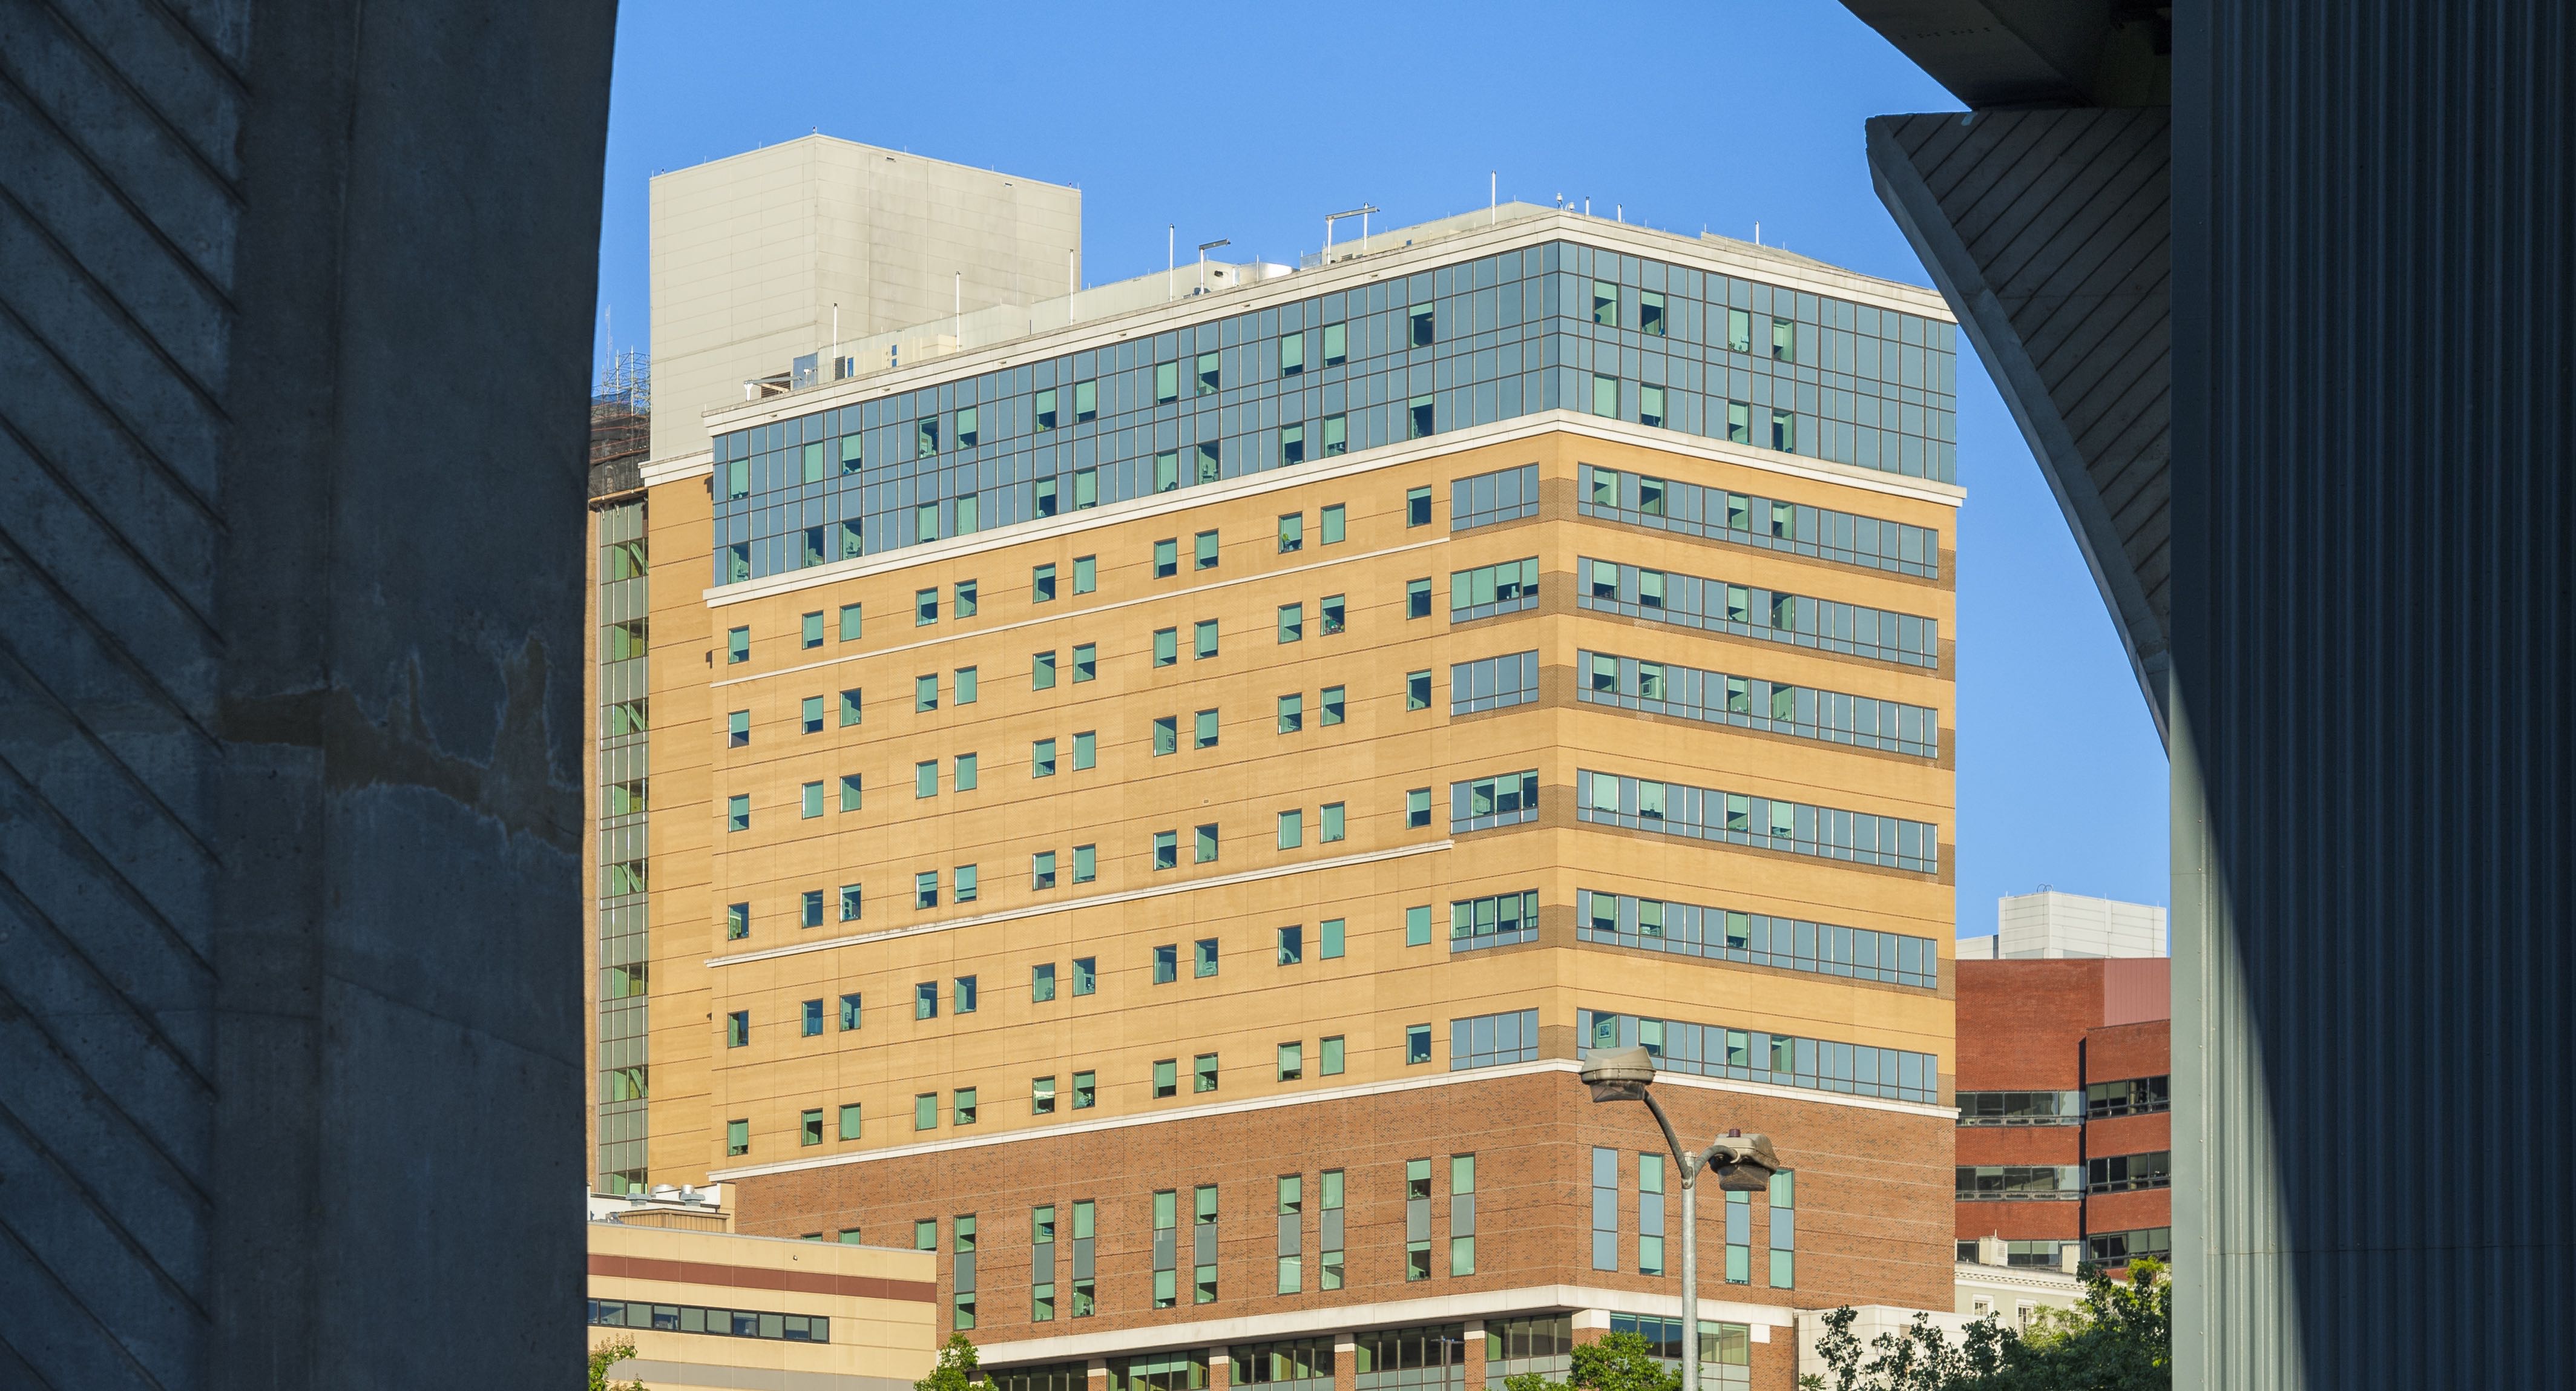 Vcu Medical Center Critical Care Hospital Location Details